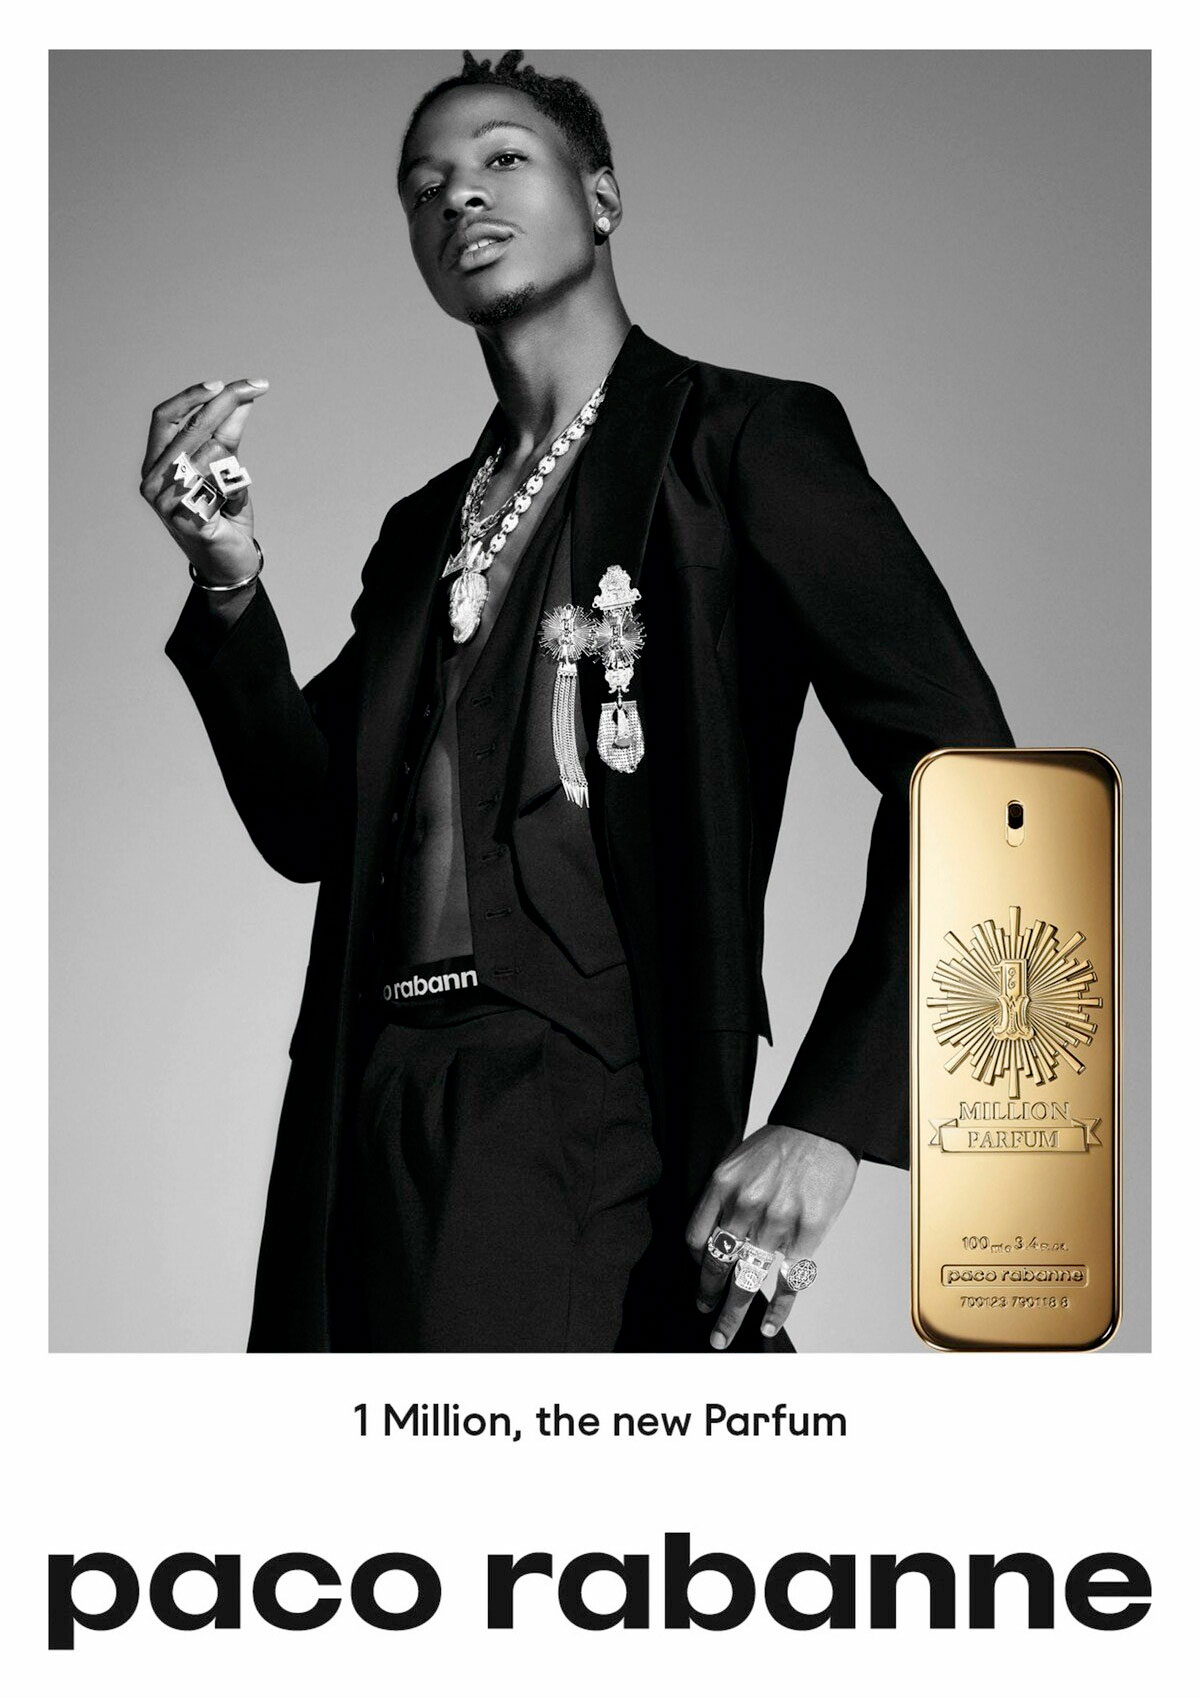 Paco Rabanne 1 Million Parfum Fragrance Ad